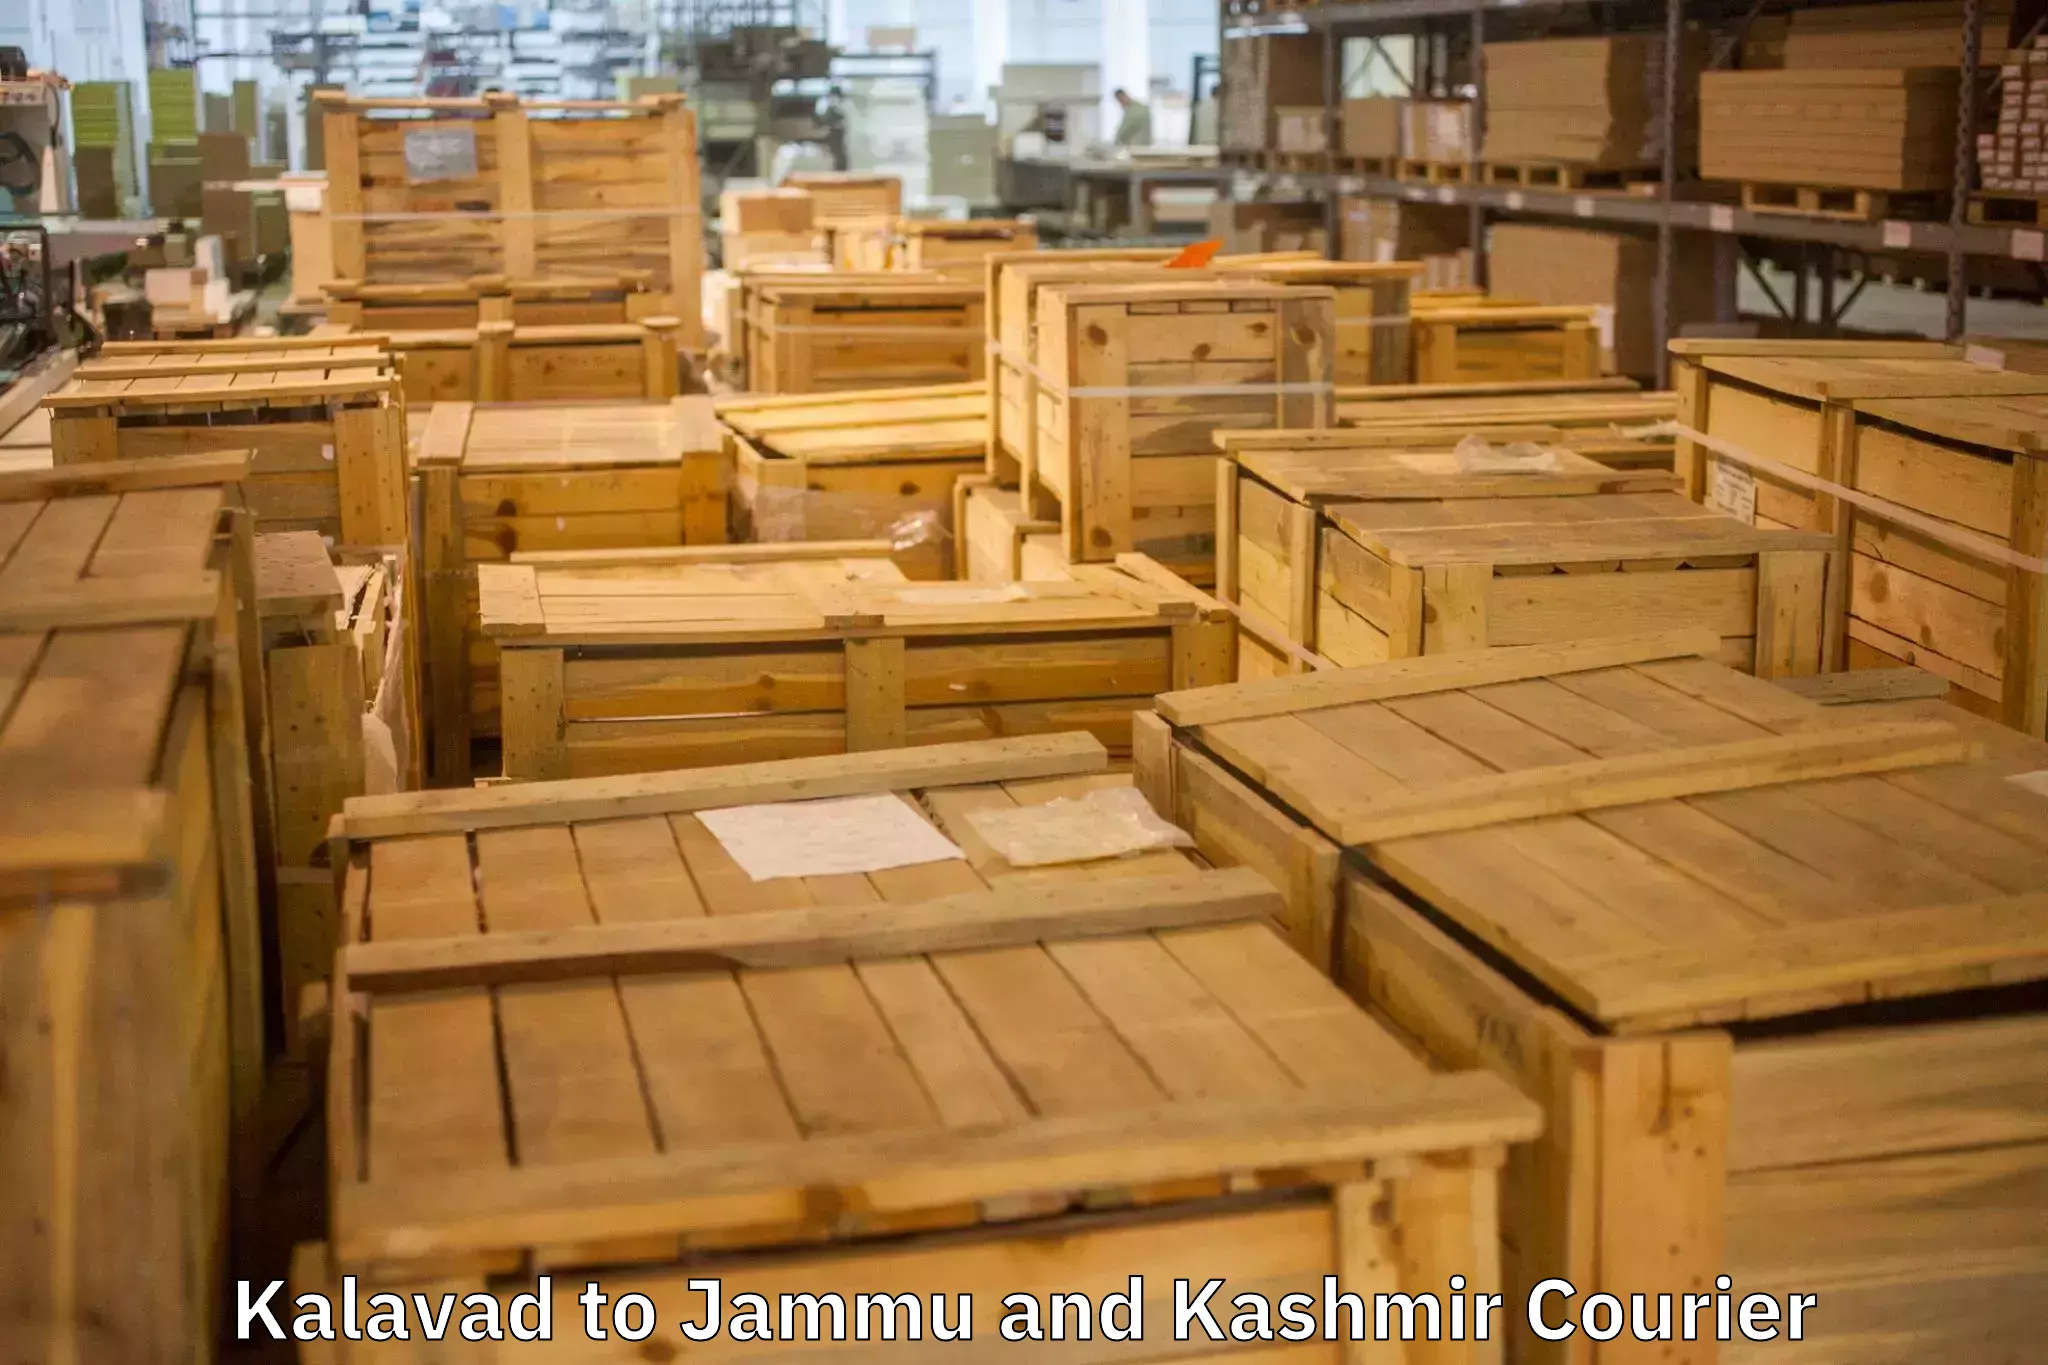 Moving and packing experts Kalavad to Srinagar Kashmir